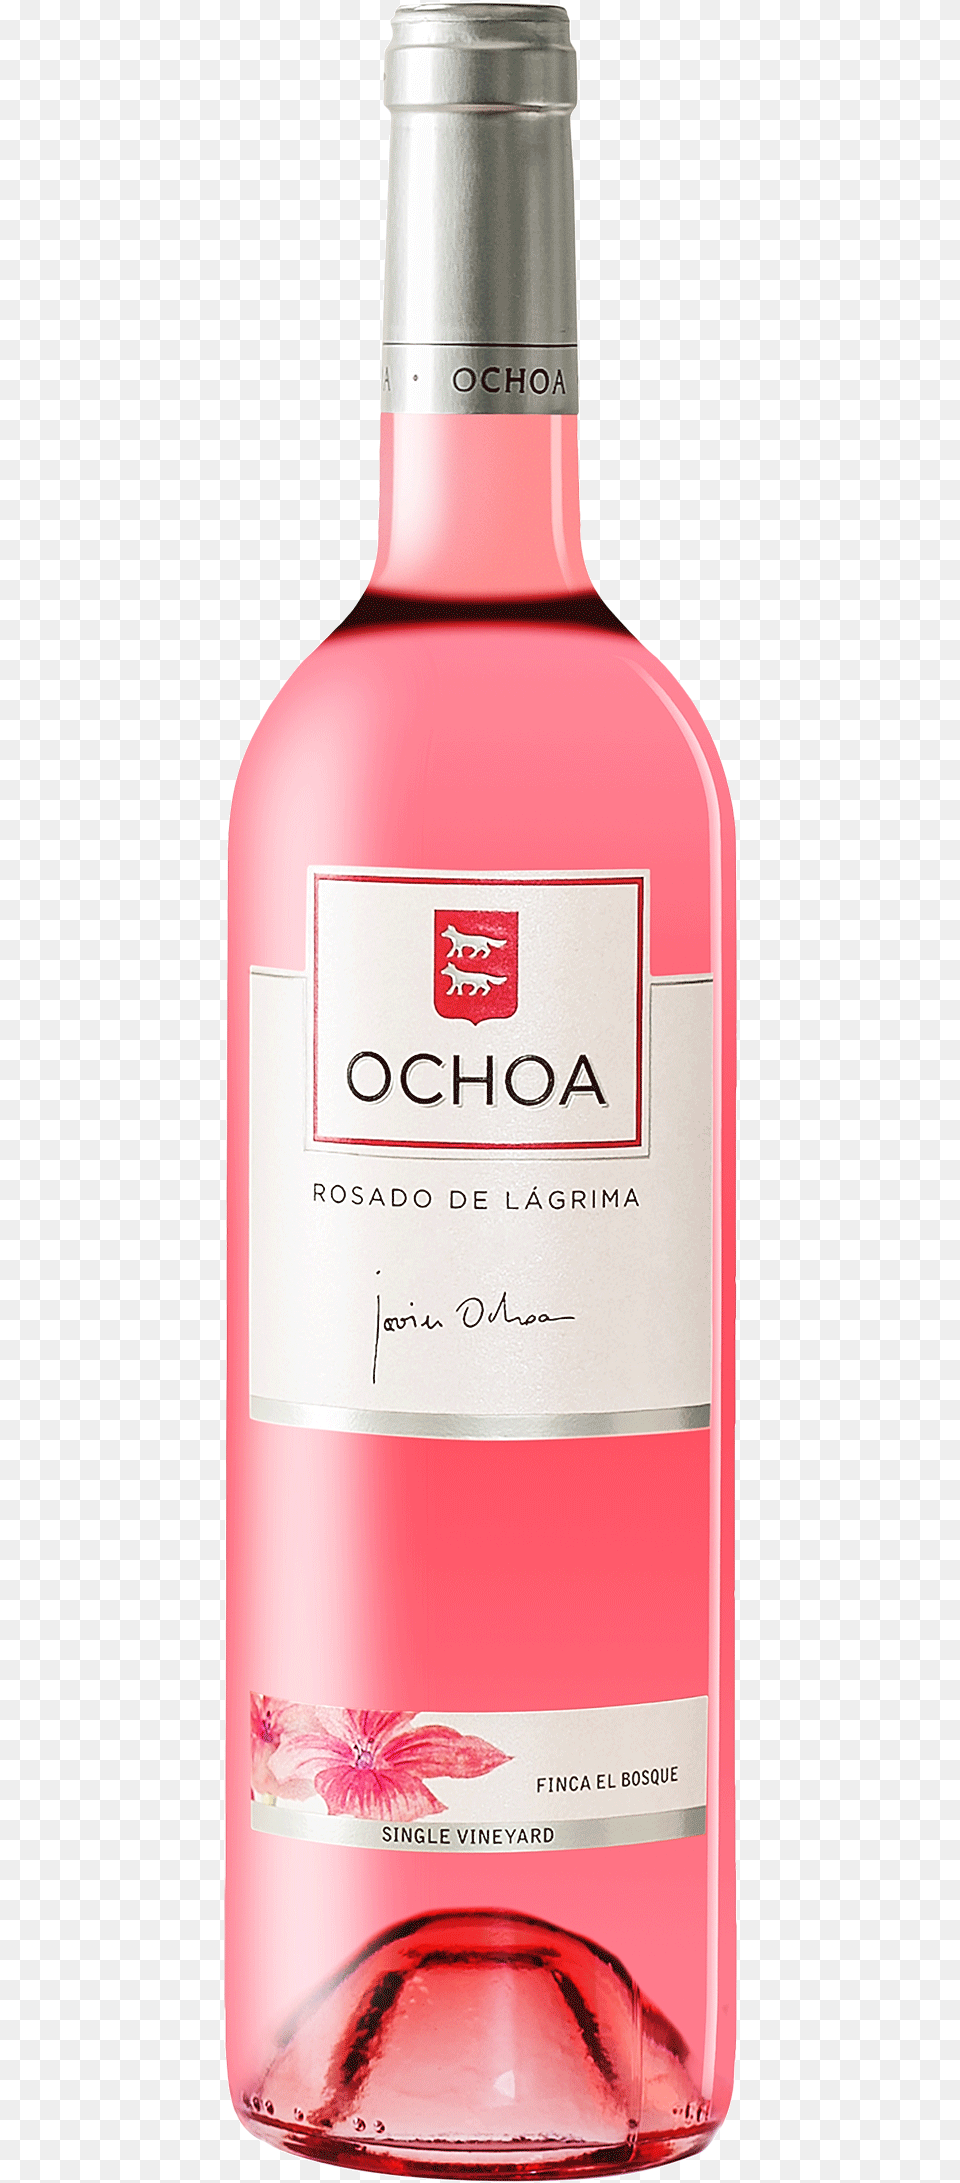 Ochoa Wine, Alcohol, Beverage, Liquor, Bottle Png